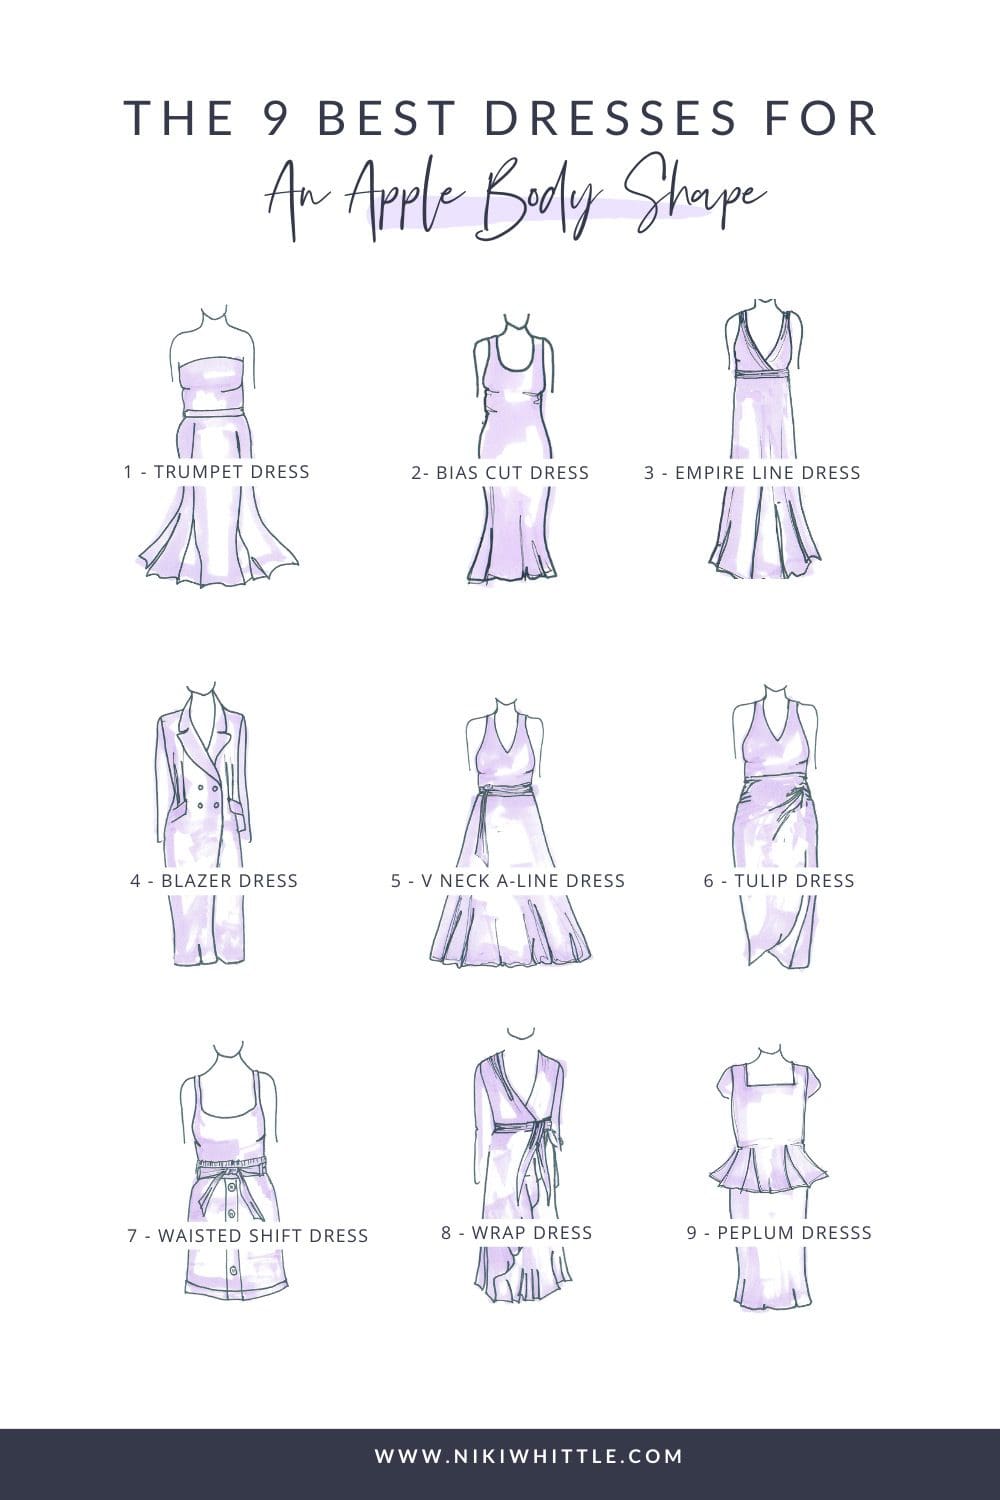 The 9 best dresses for an apple body shape